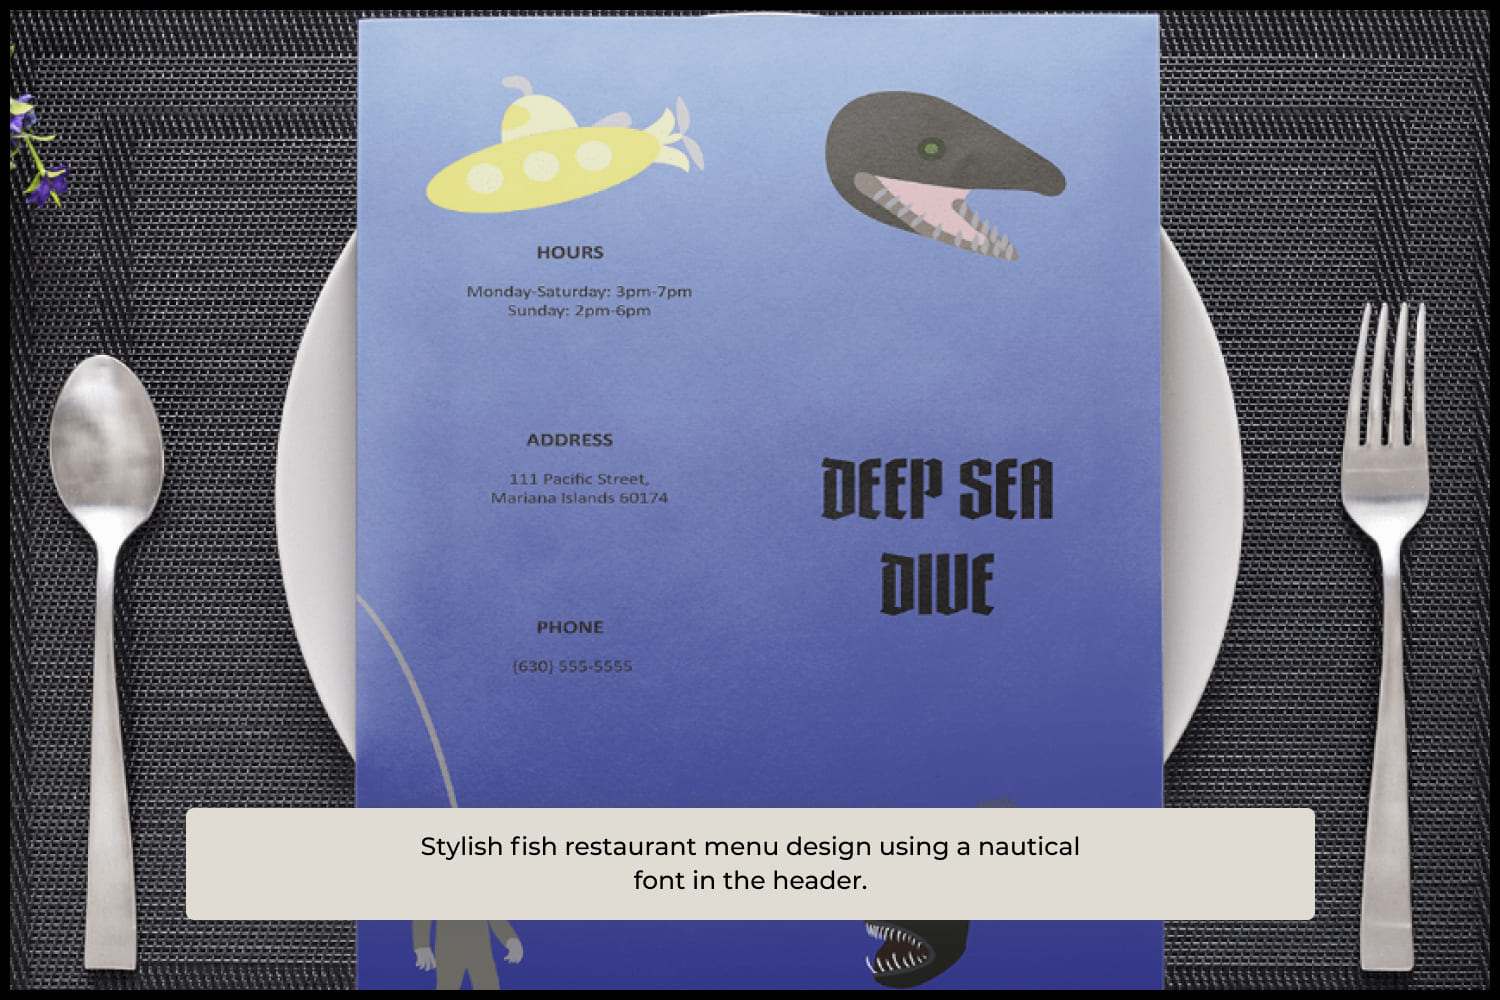 Stylish fish restaurant menu design using a nautical font in the header.